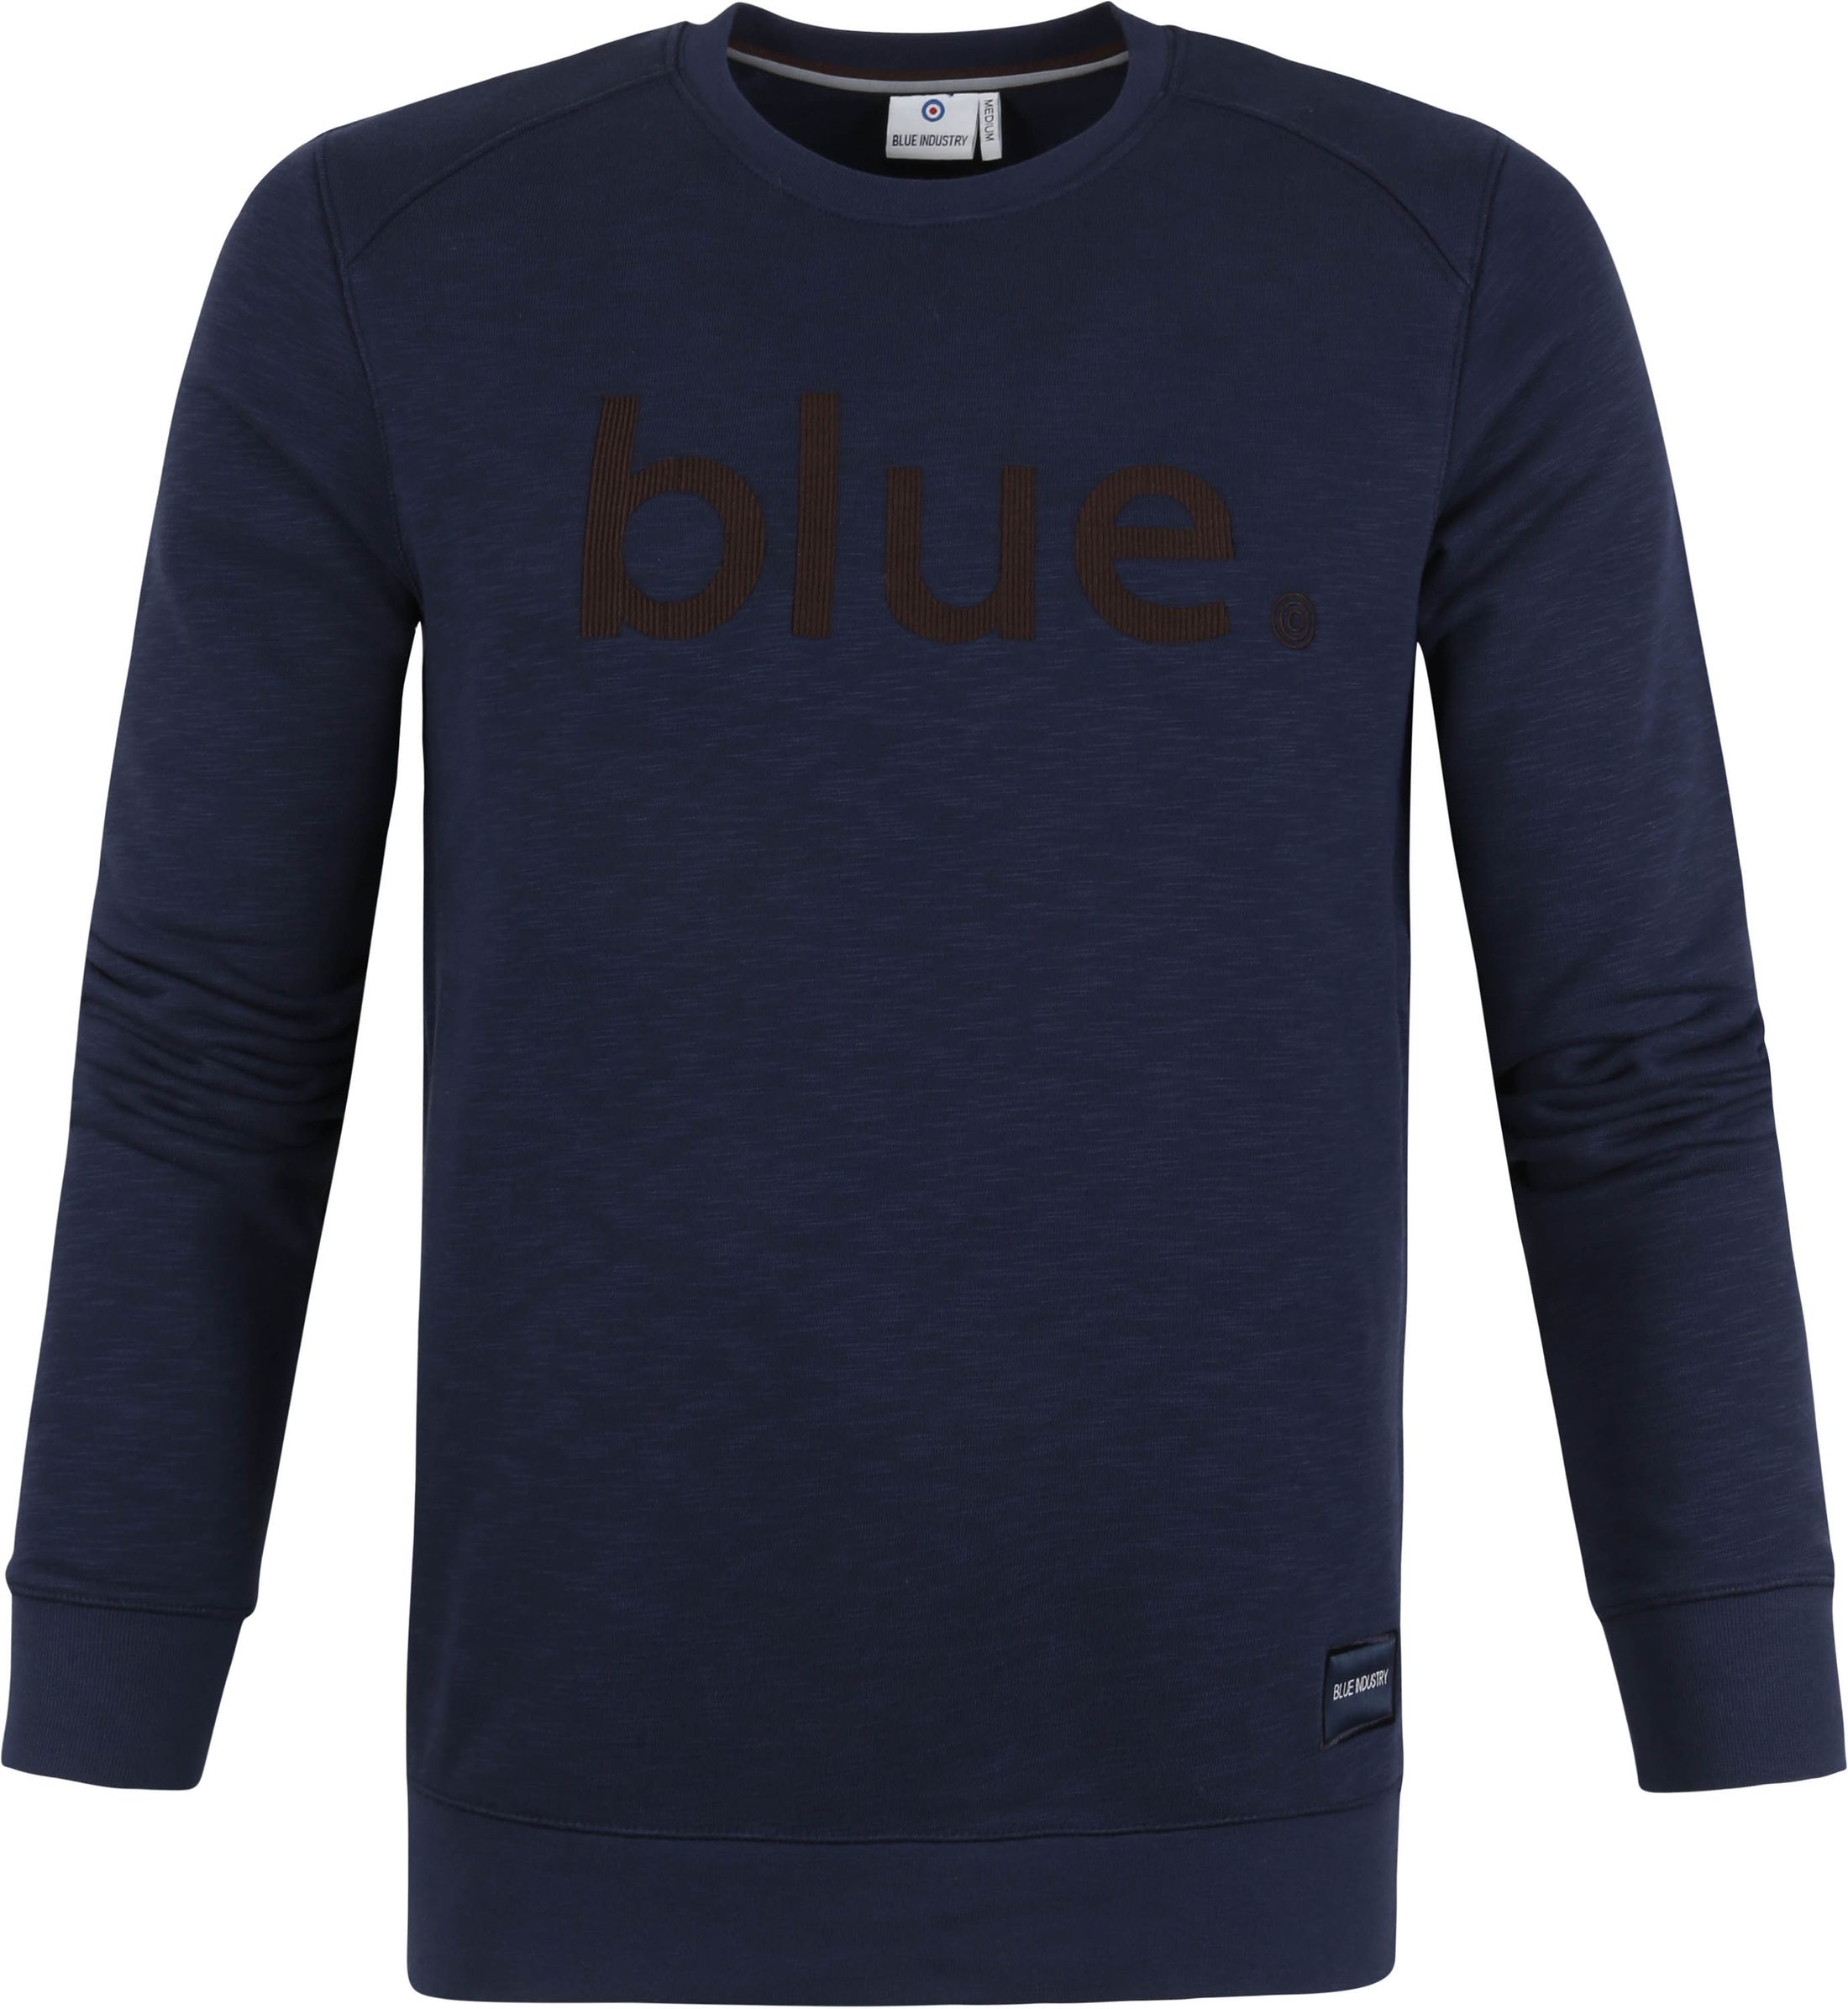 Industry Sweater KBIW21 Melange Navy Blue Dark Blue size L